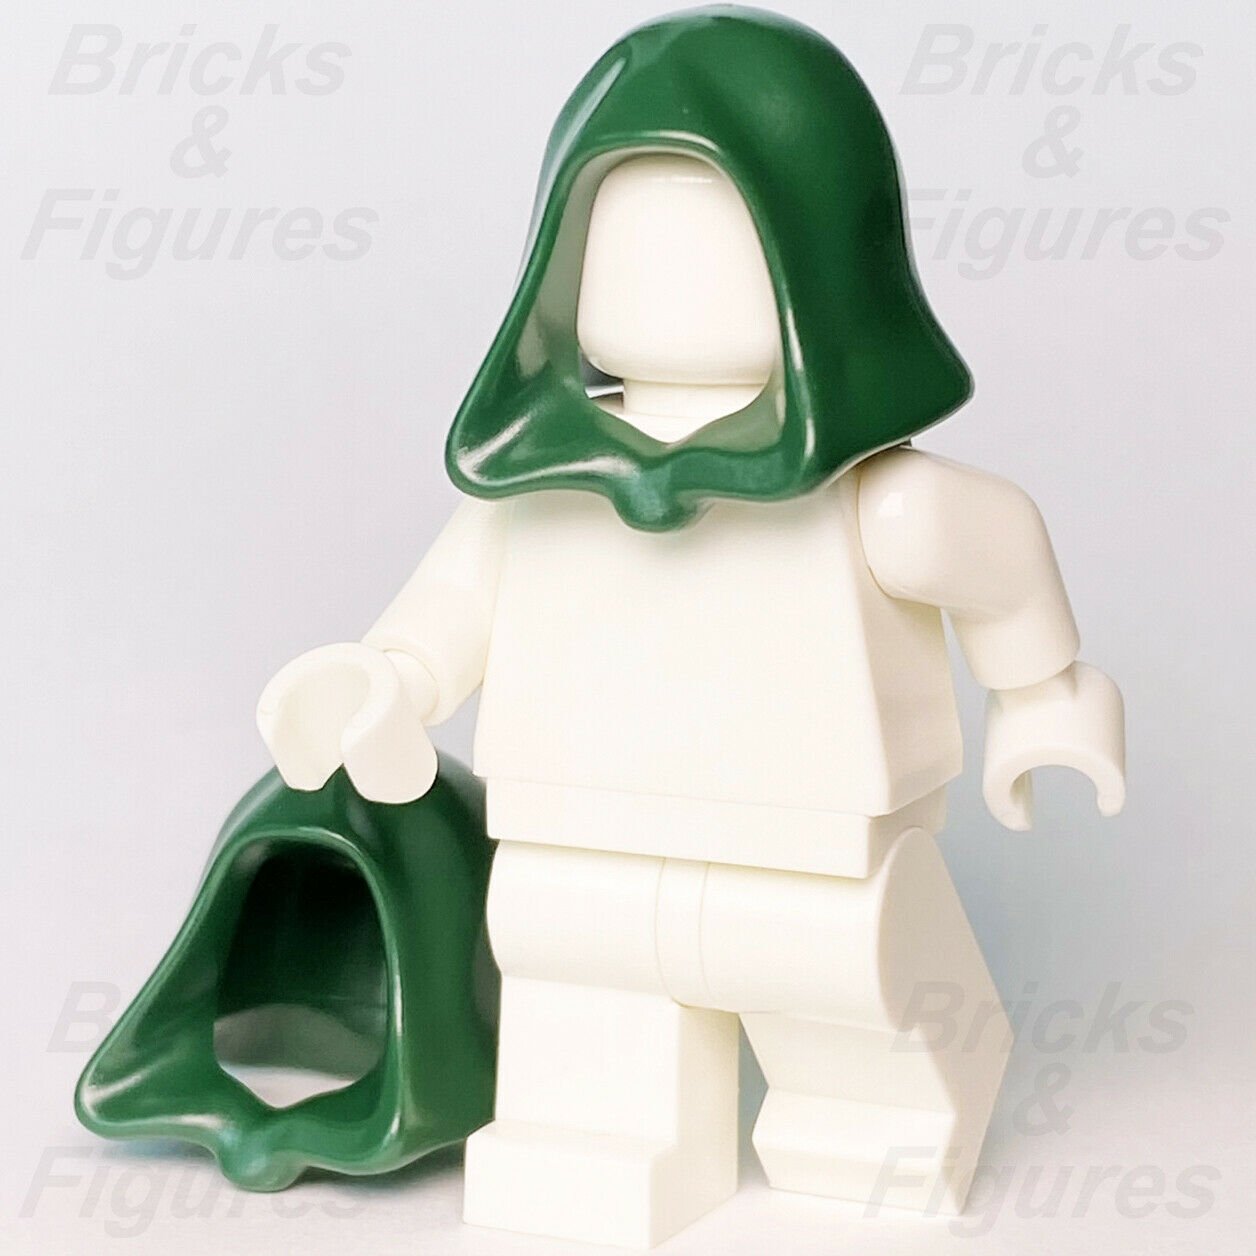 2 x Star Wars LEGO Dark Green Robe Hoods Minifigure Headgear Parts 30381 96232 - Bricks & Figures